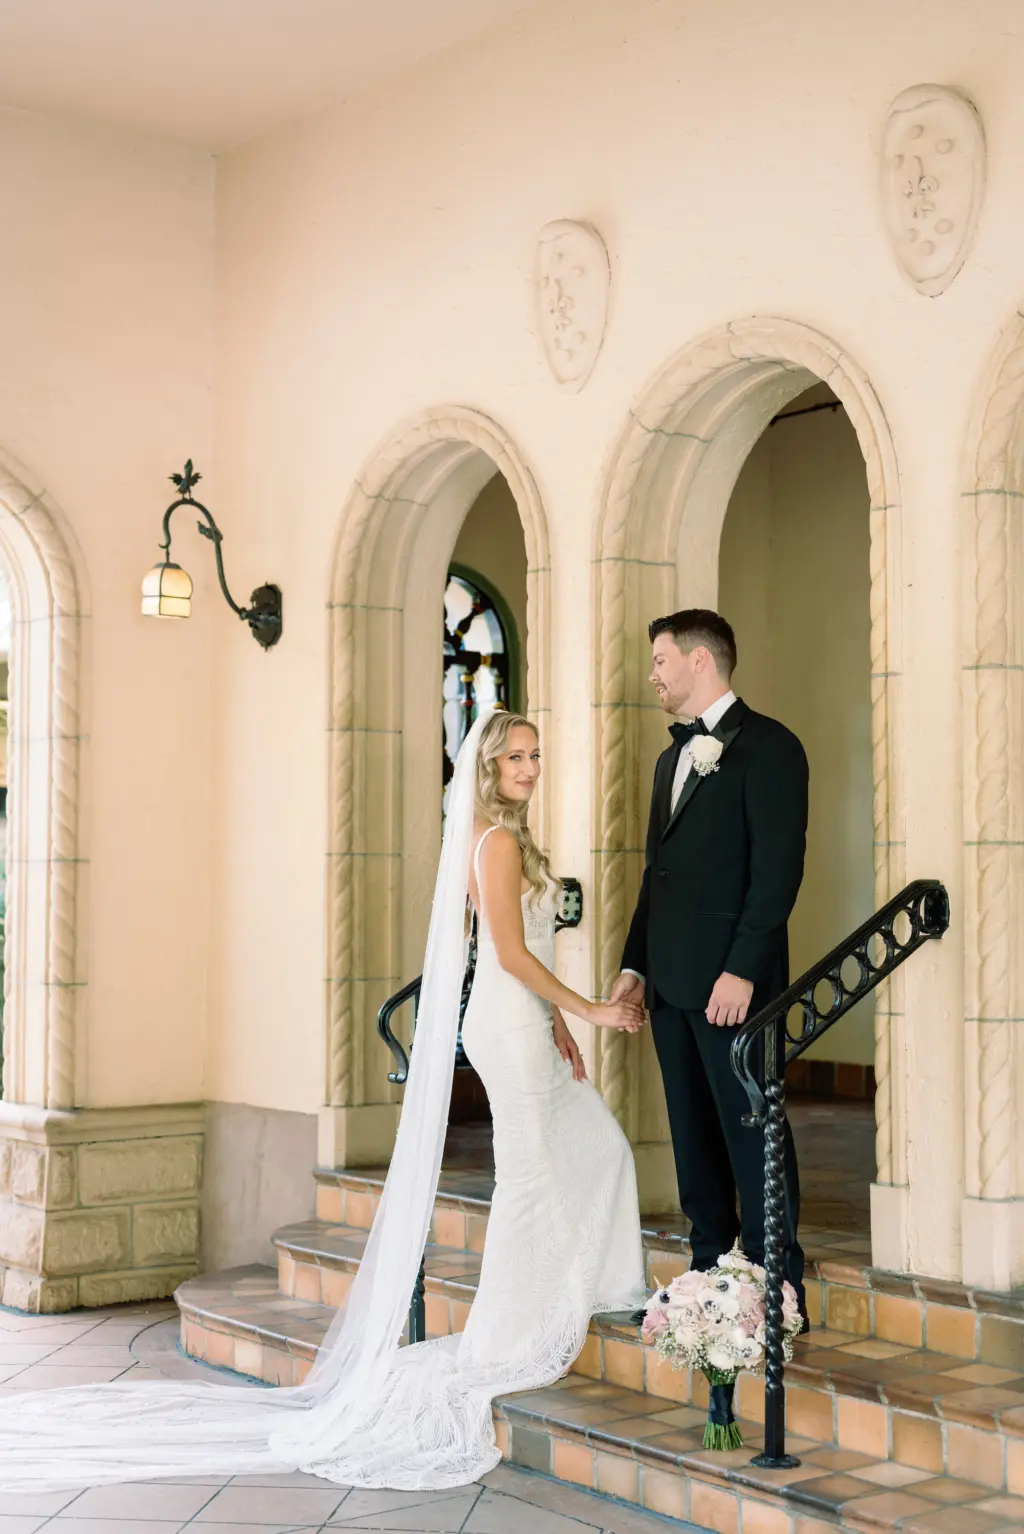 Bride and Groom First Look Wedding Portrait | Sarasota Photographer Dewitt for Love Photography